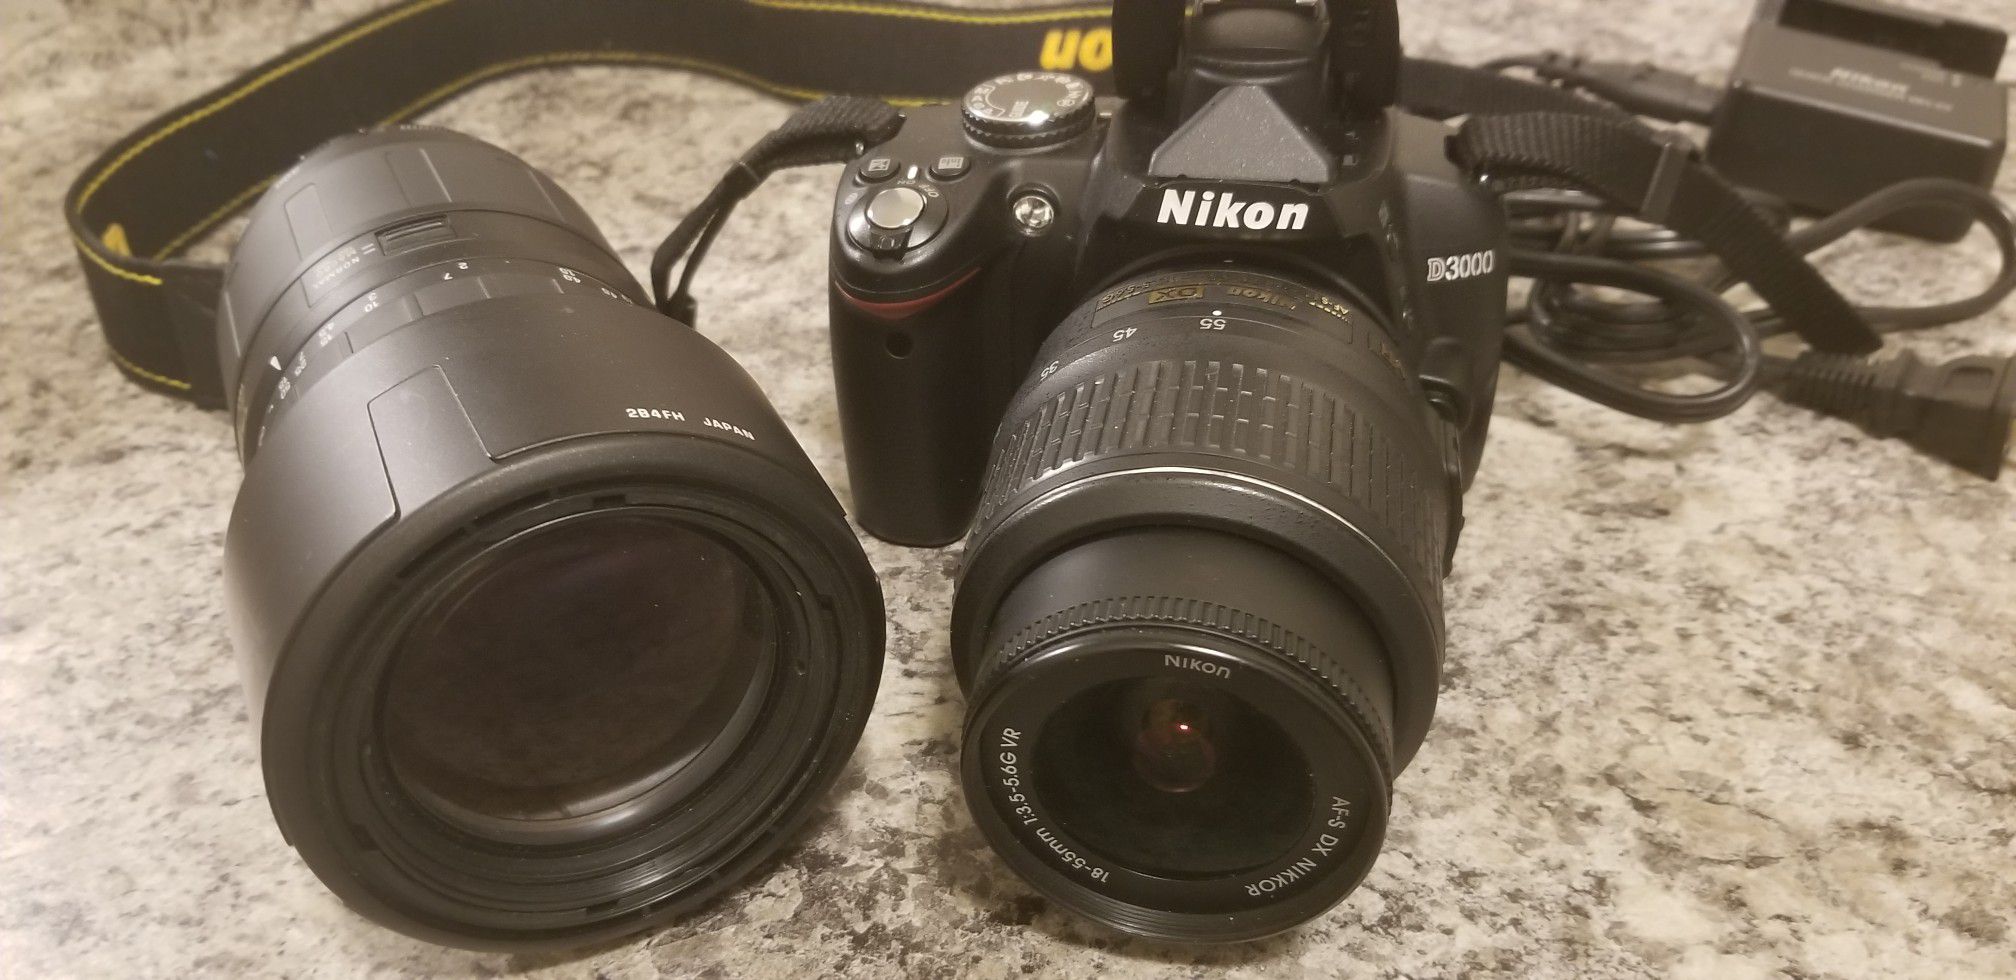 Nikon D3000 with 2 lenses